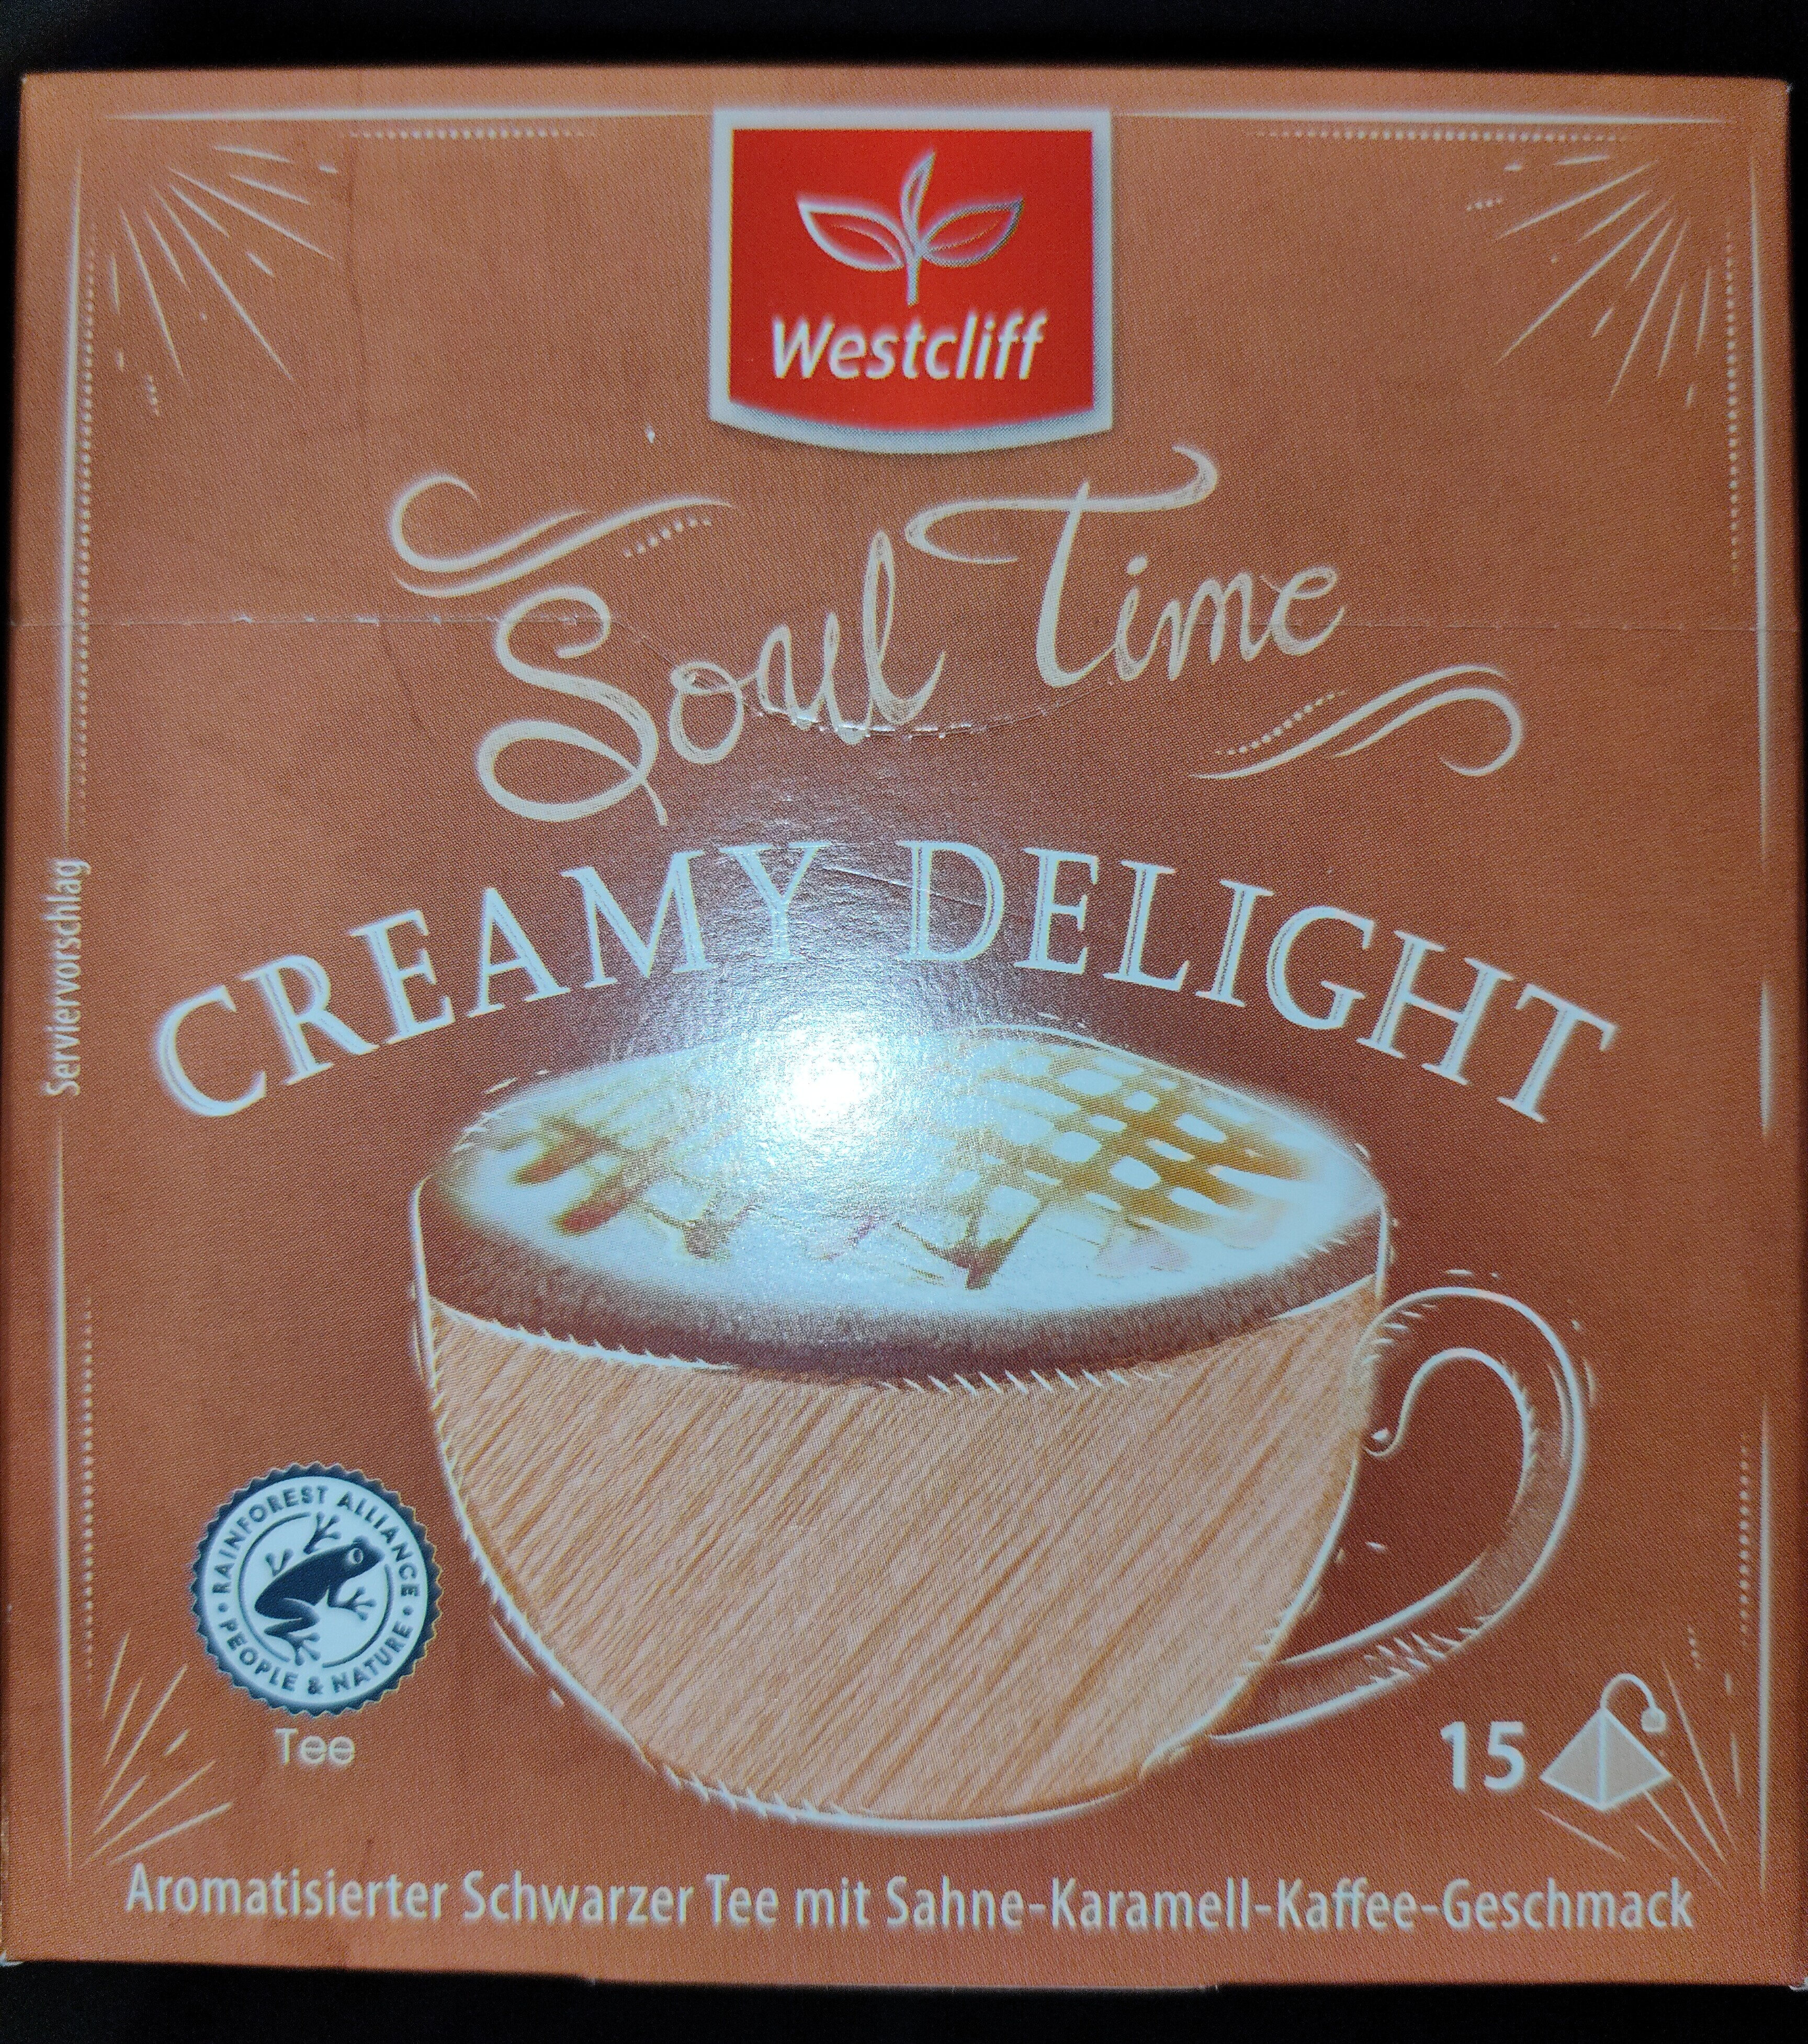 Soul Time - Creamy Delight - Product - de